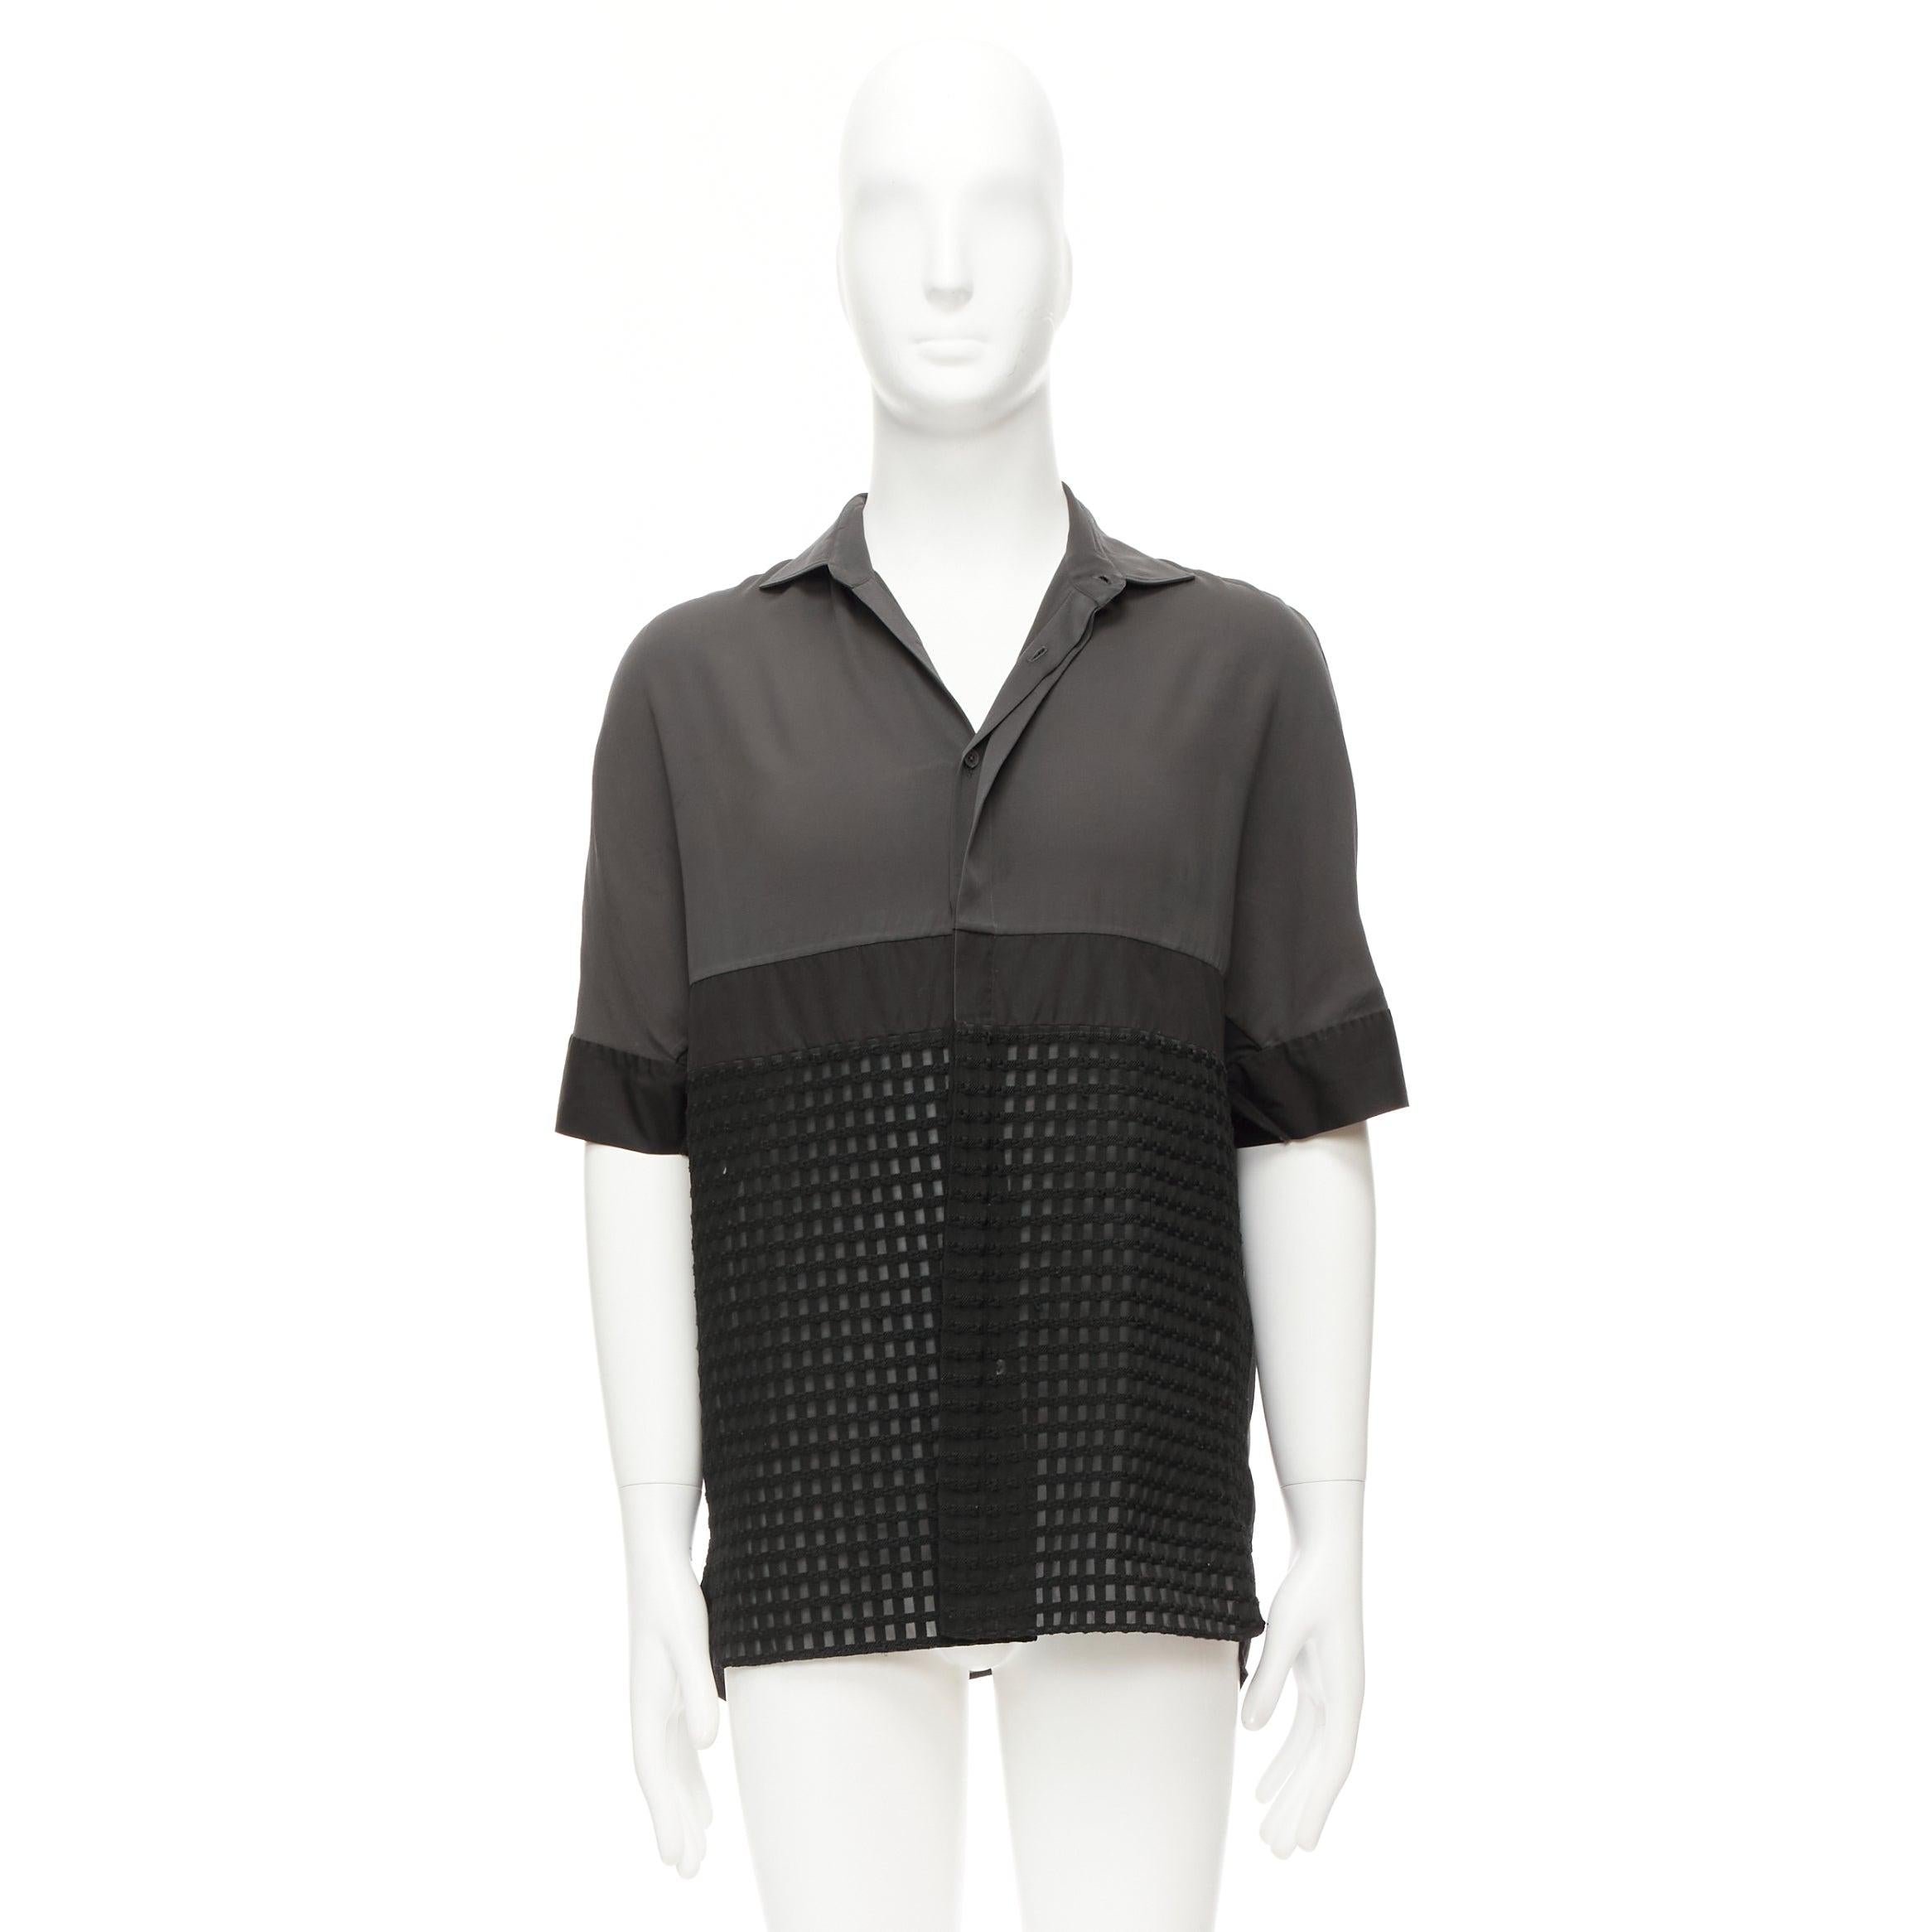 LANVIN grey black silky twill mix texture short sleeves dress shirt EU38/15 S For Sale 5